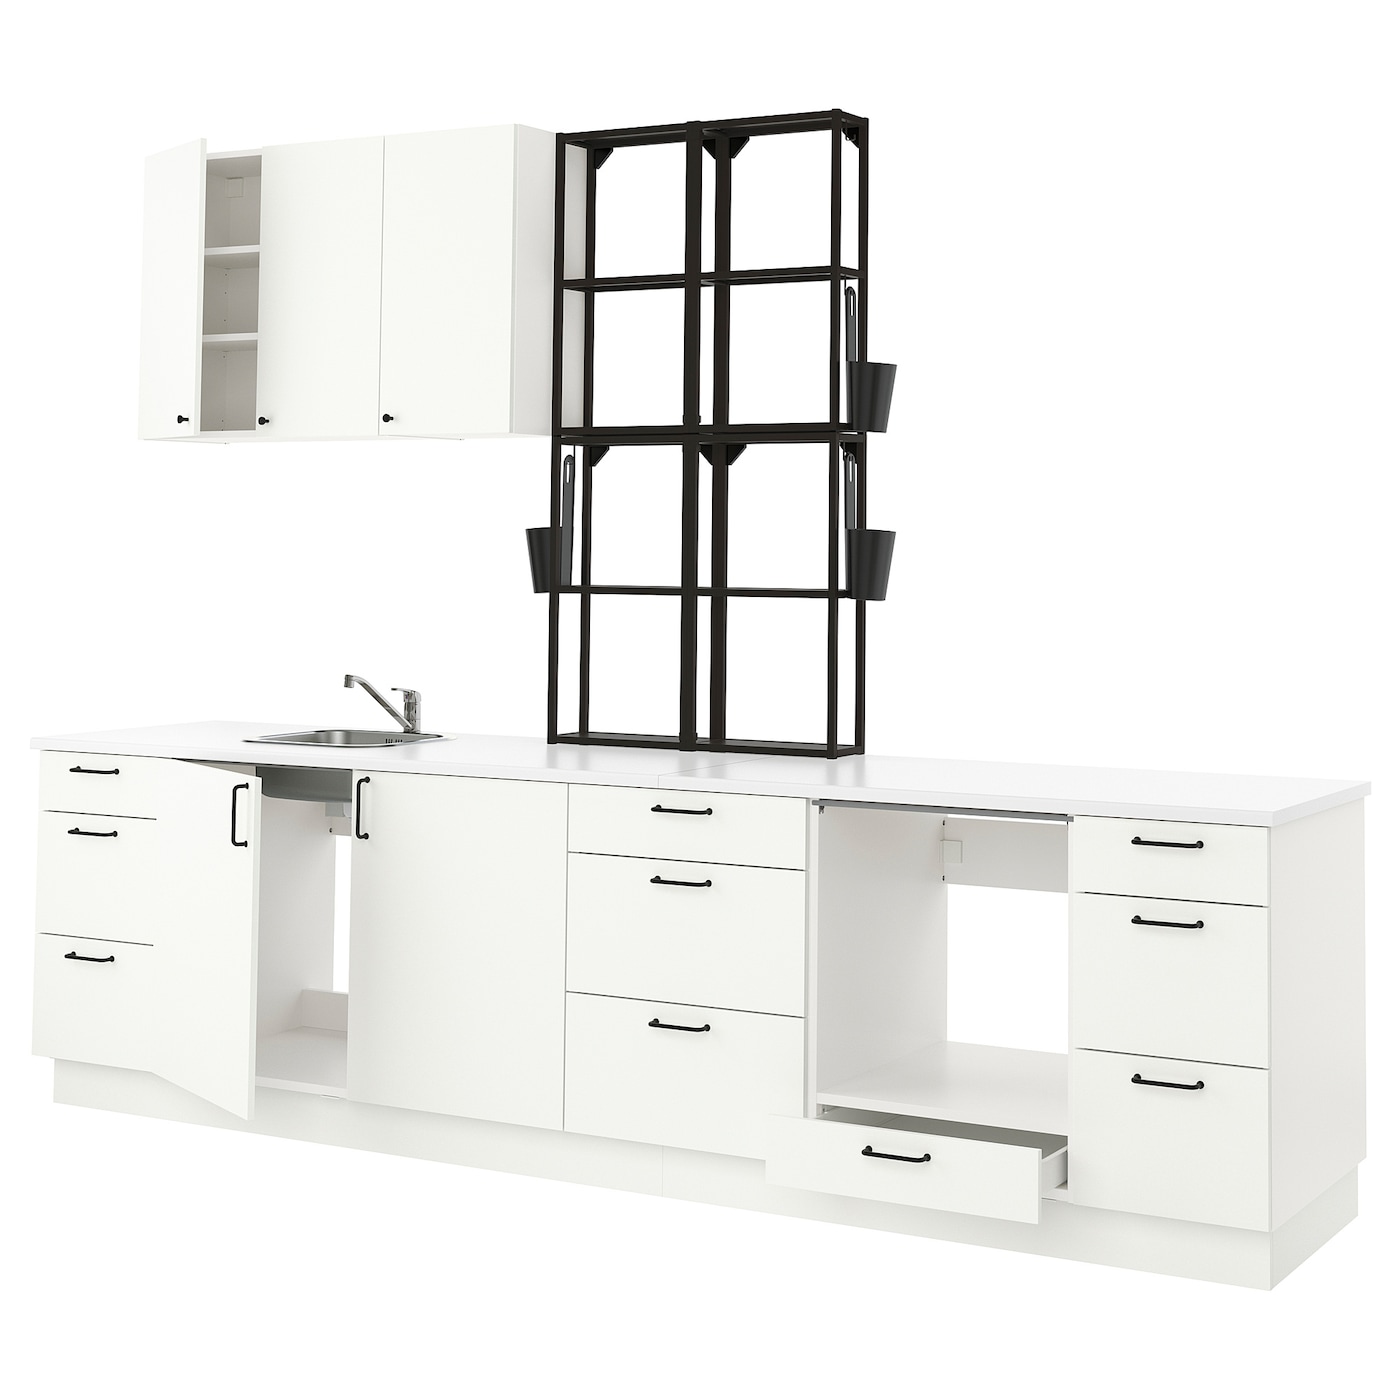 Кухня - ENHET  IKEA/ ЭНХЕТ ИКЕА, 323х241 см, белый/черный